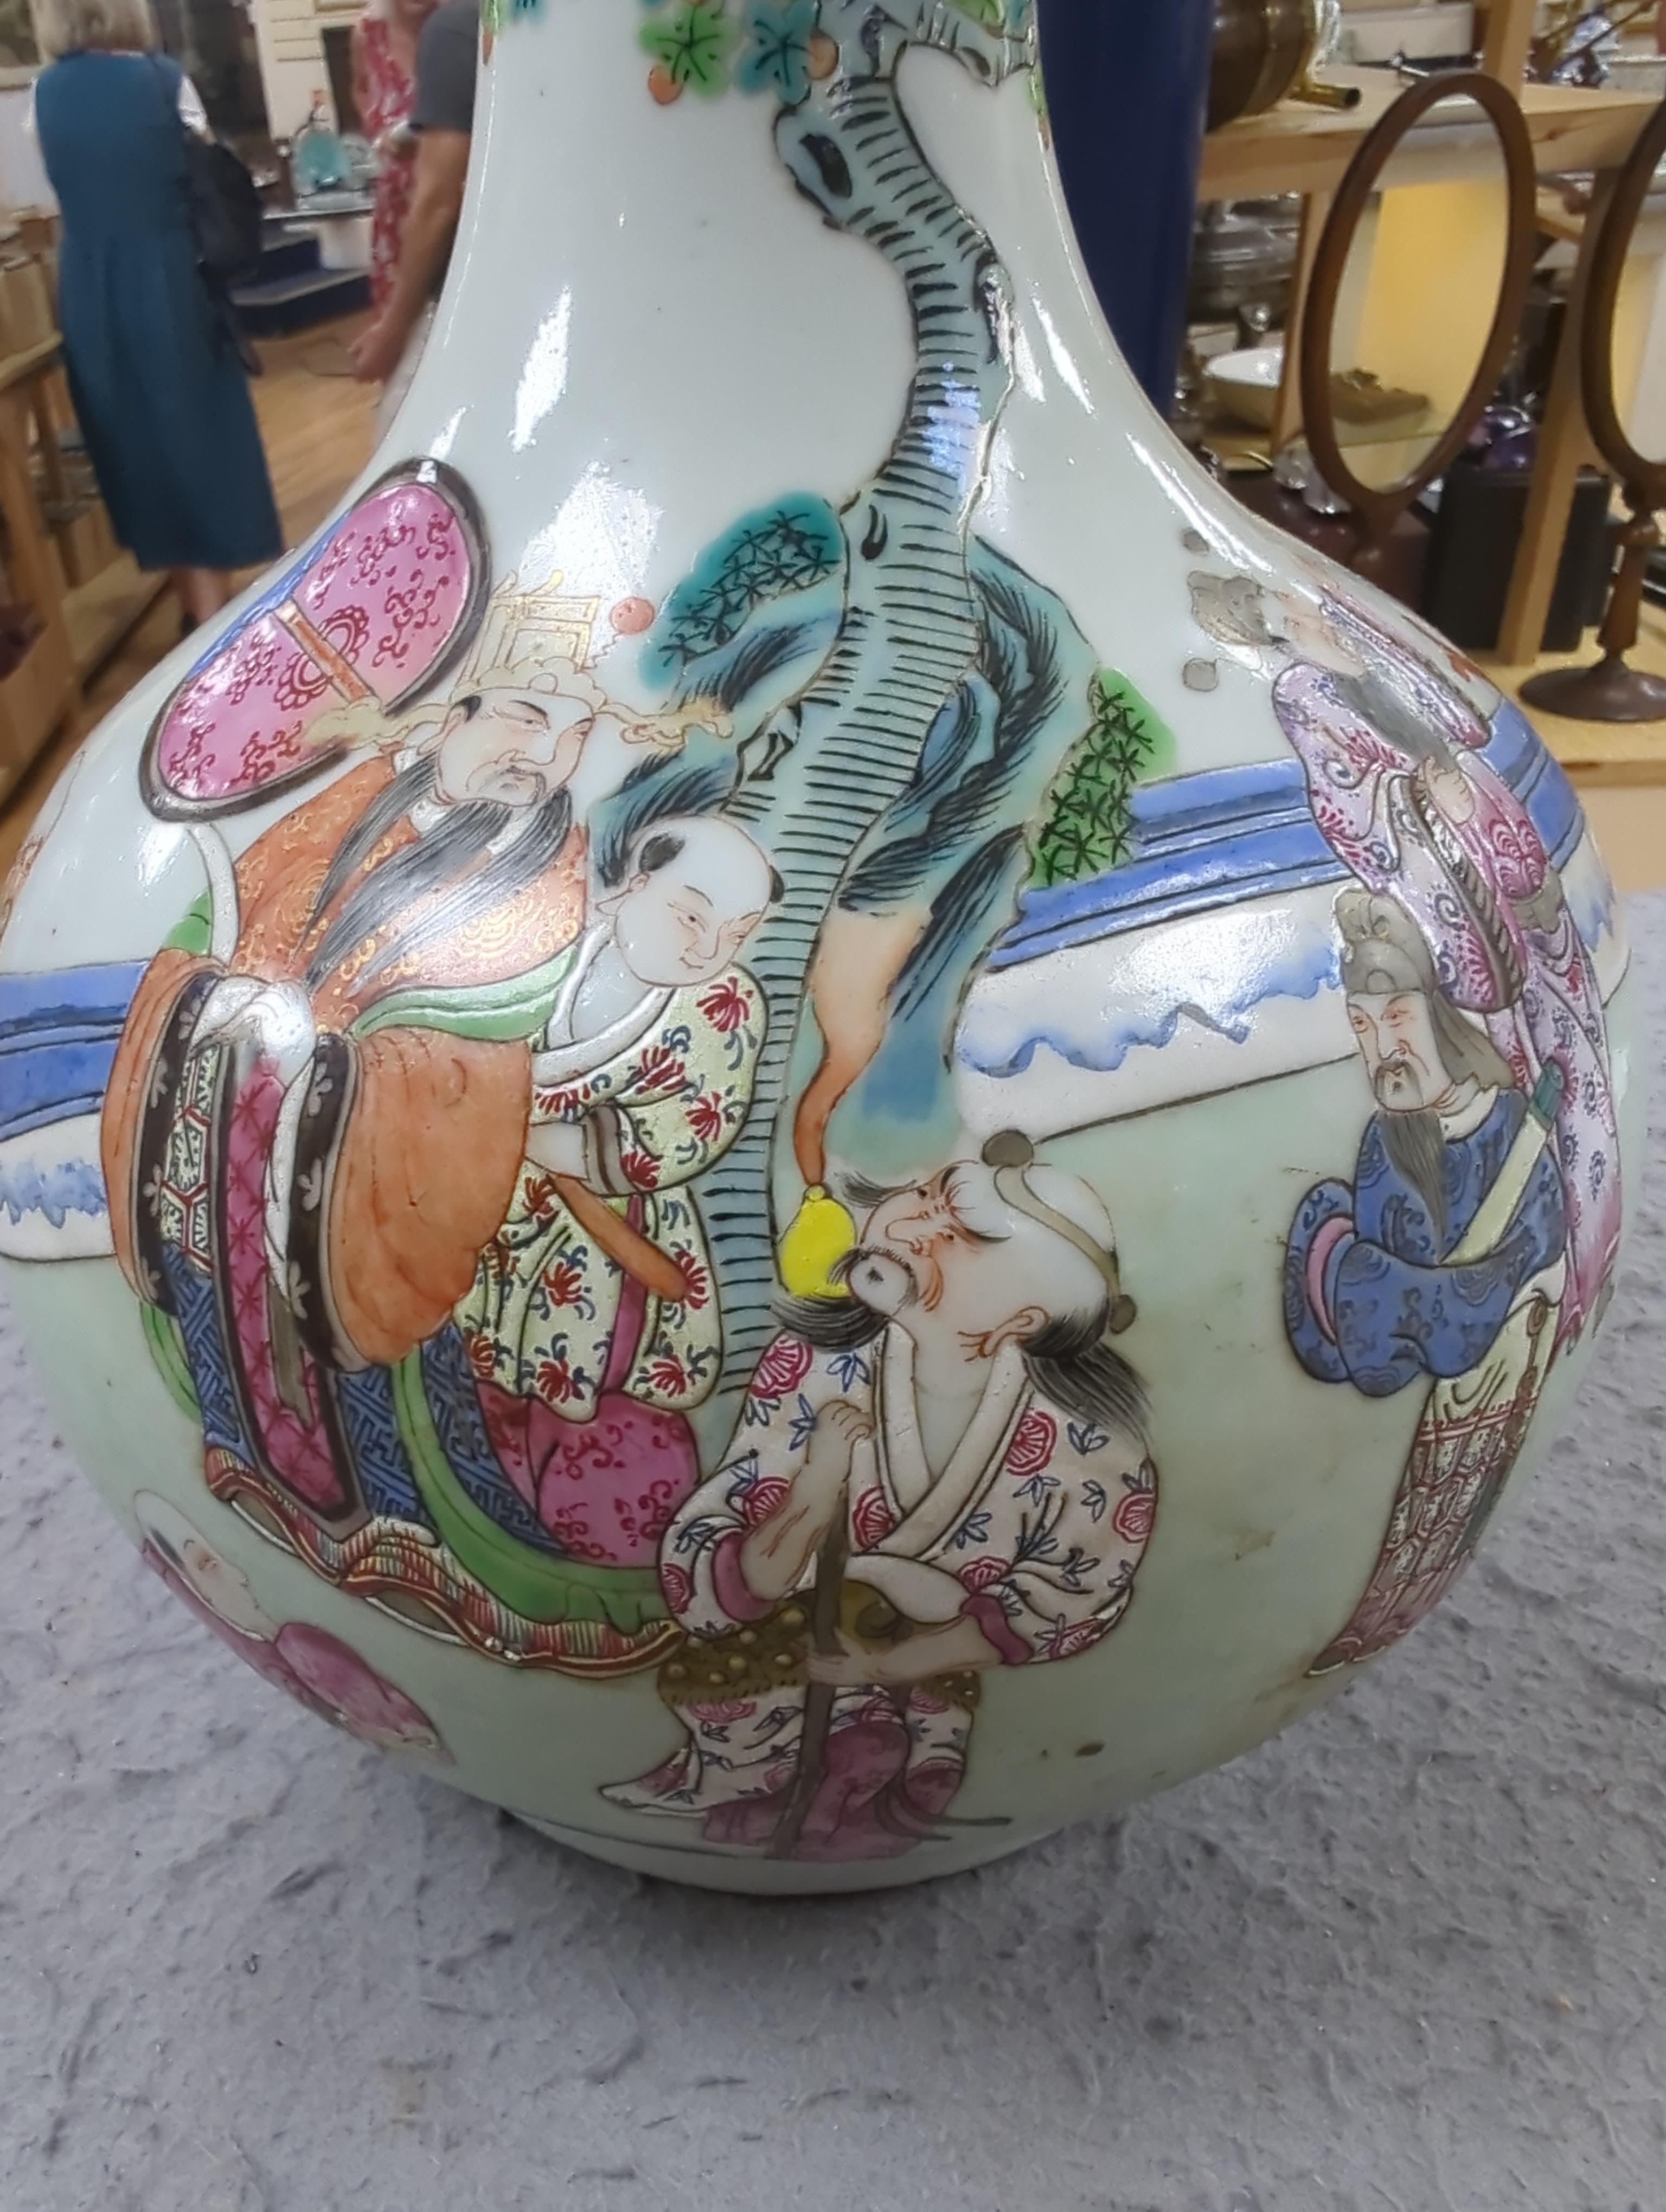 A Chinese famille rose bottle neck vase, 34cm